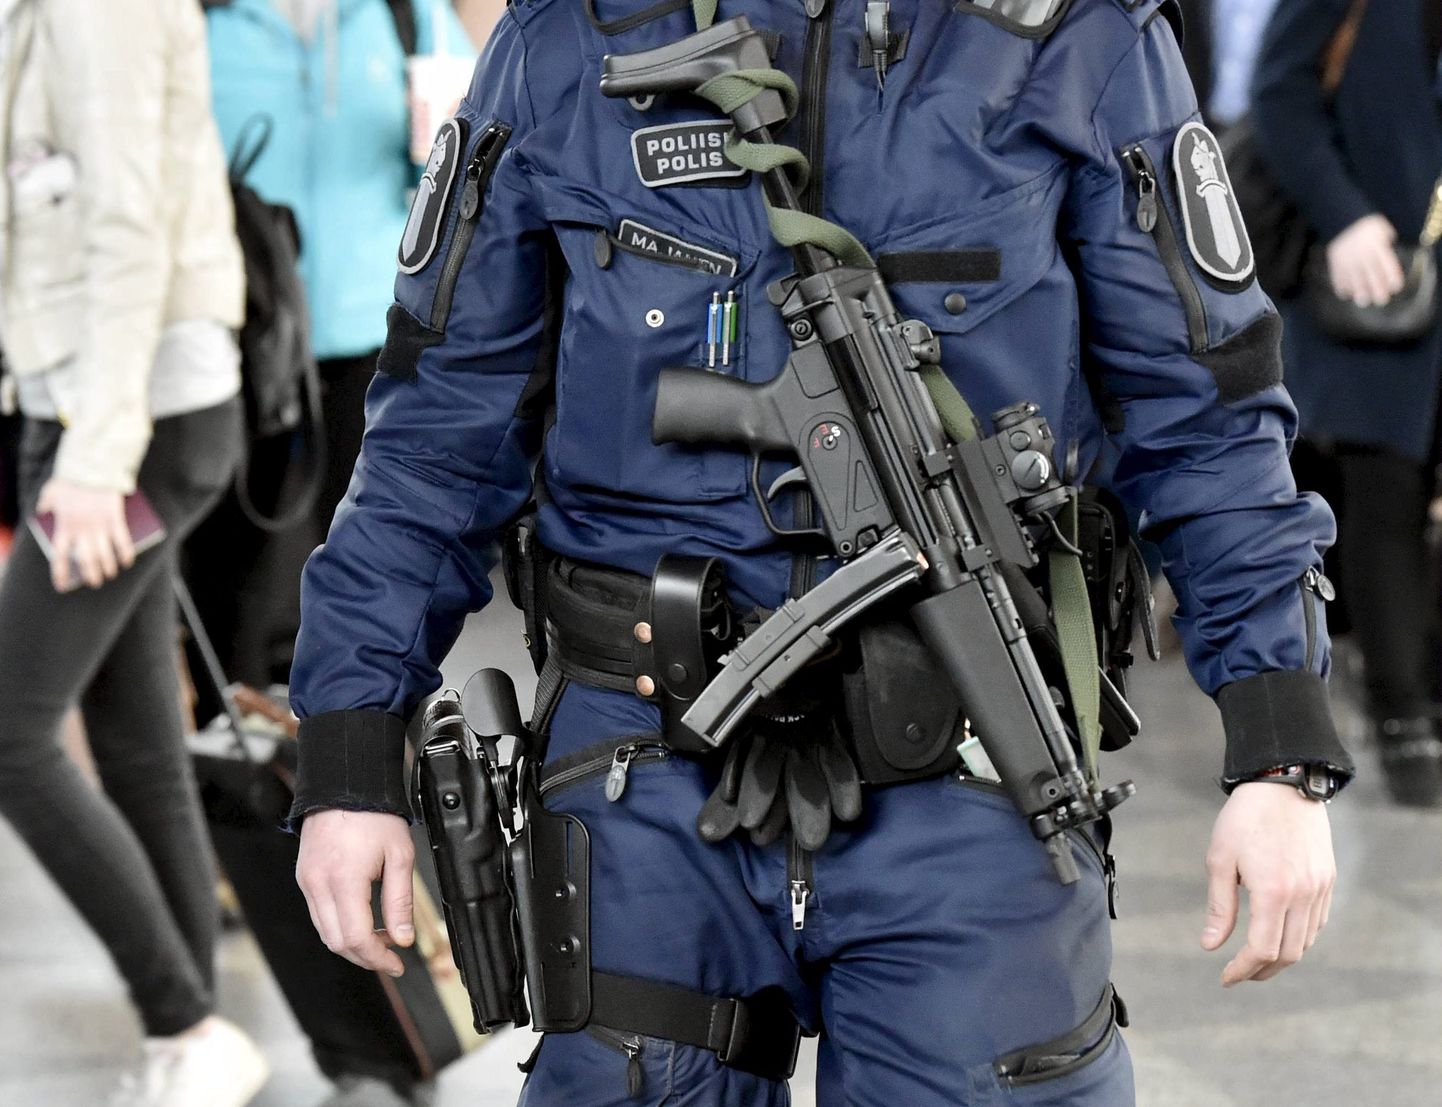 Soome politseinik püstolkuulipildujaga MP5.